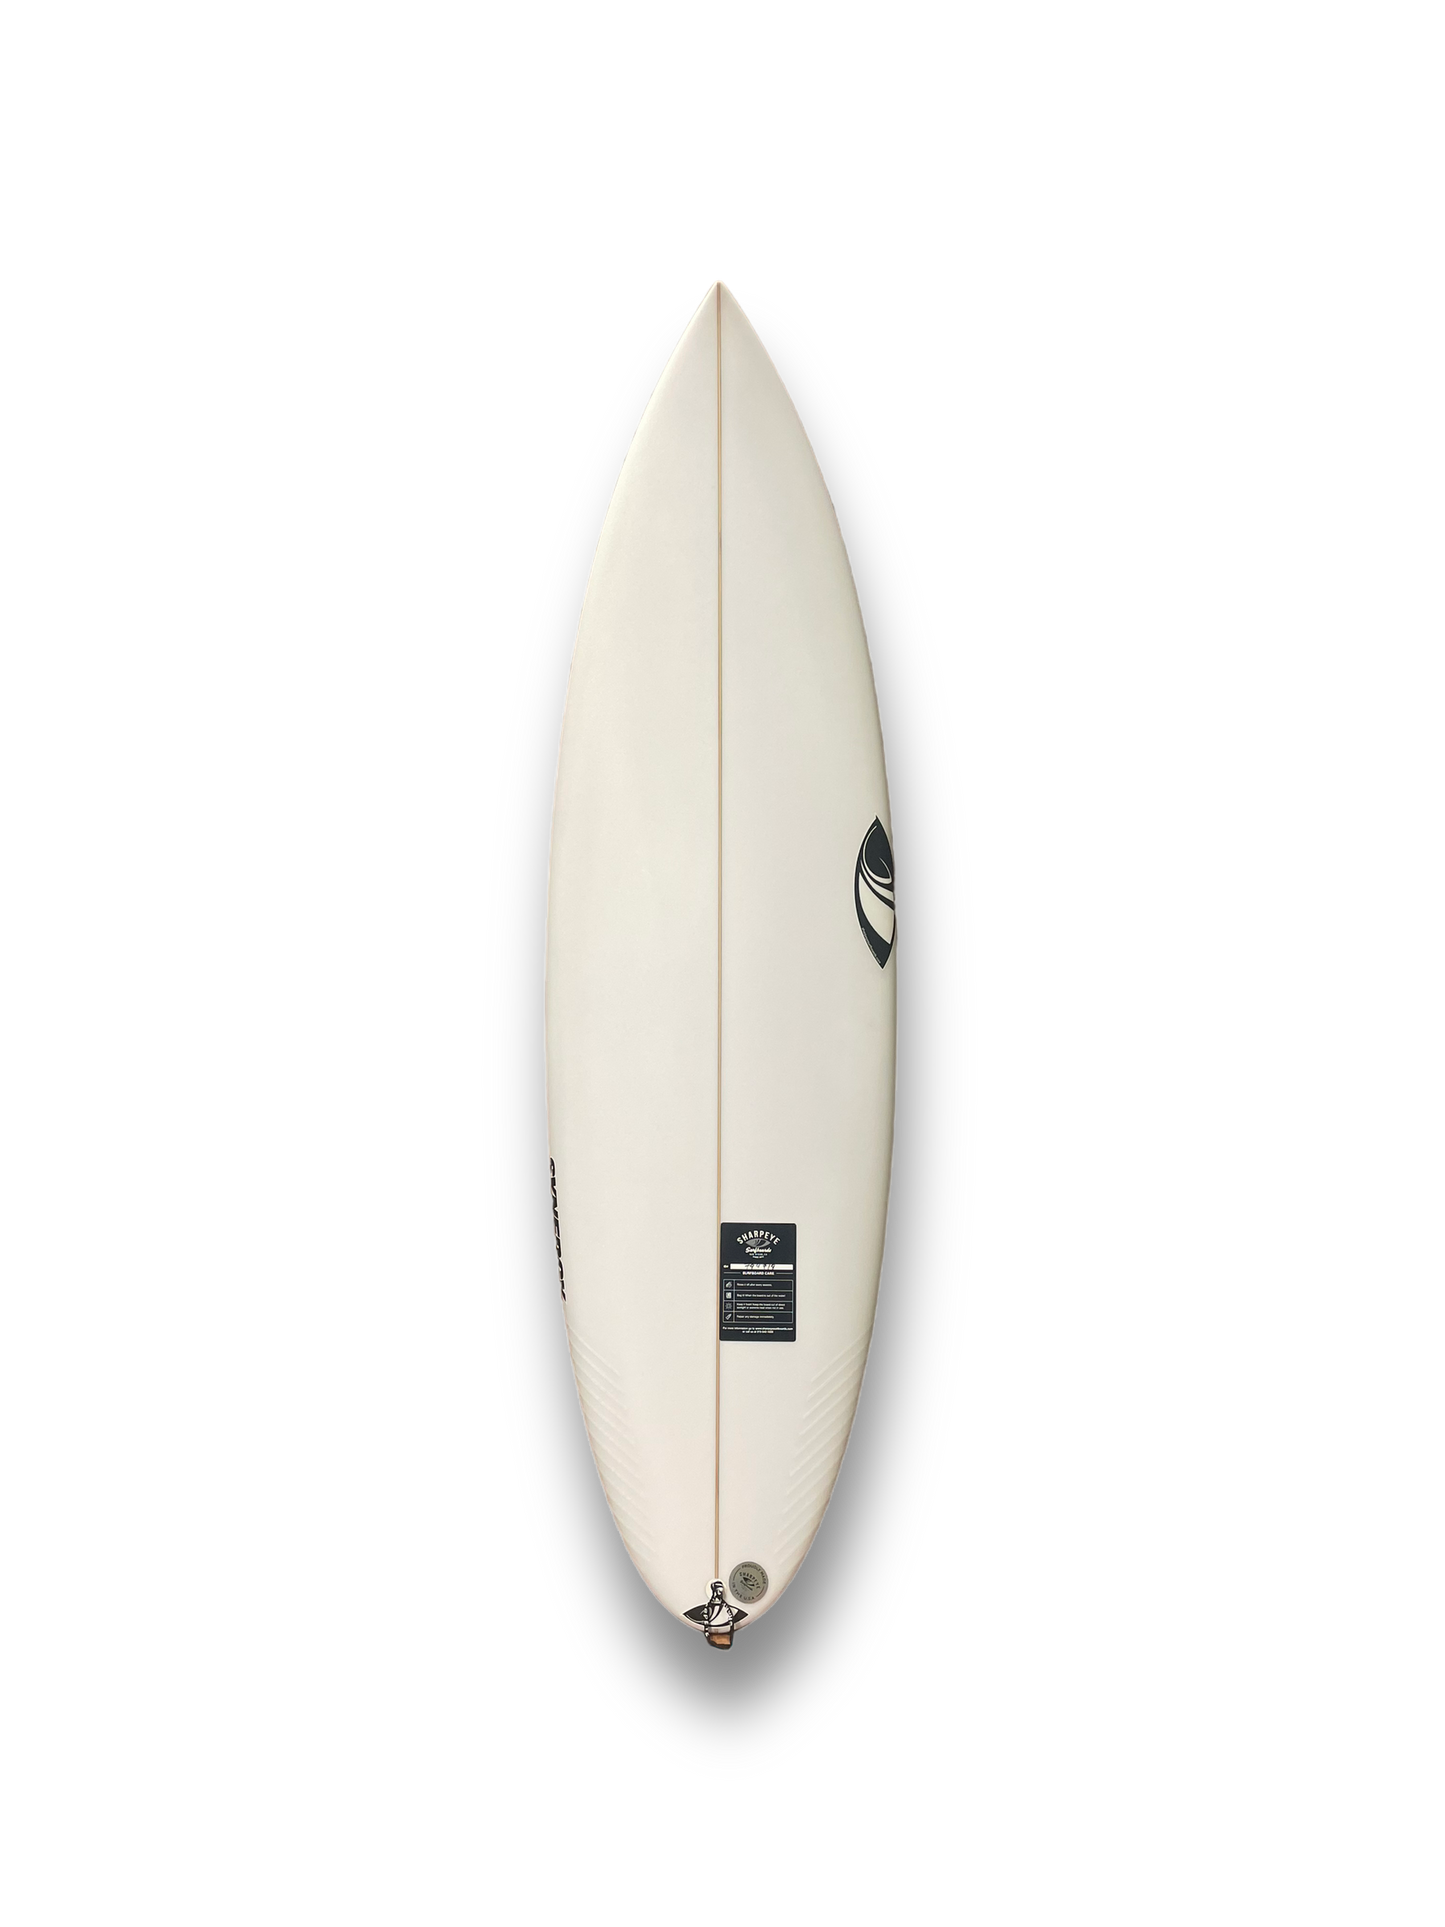 Sharp Eye Synergy 5'11" Surfboard